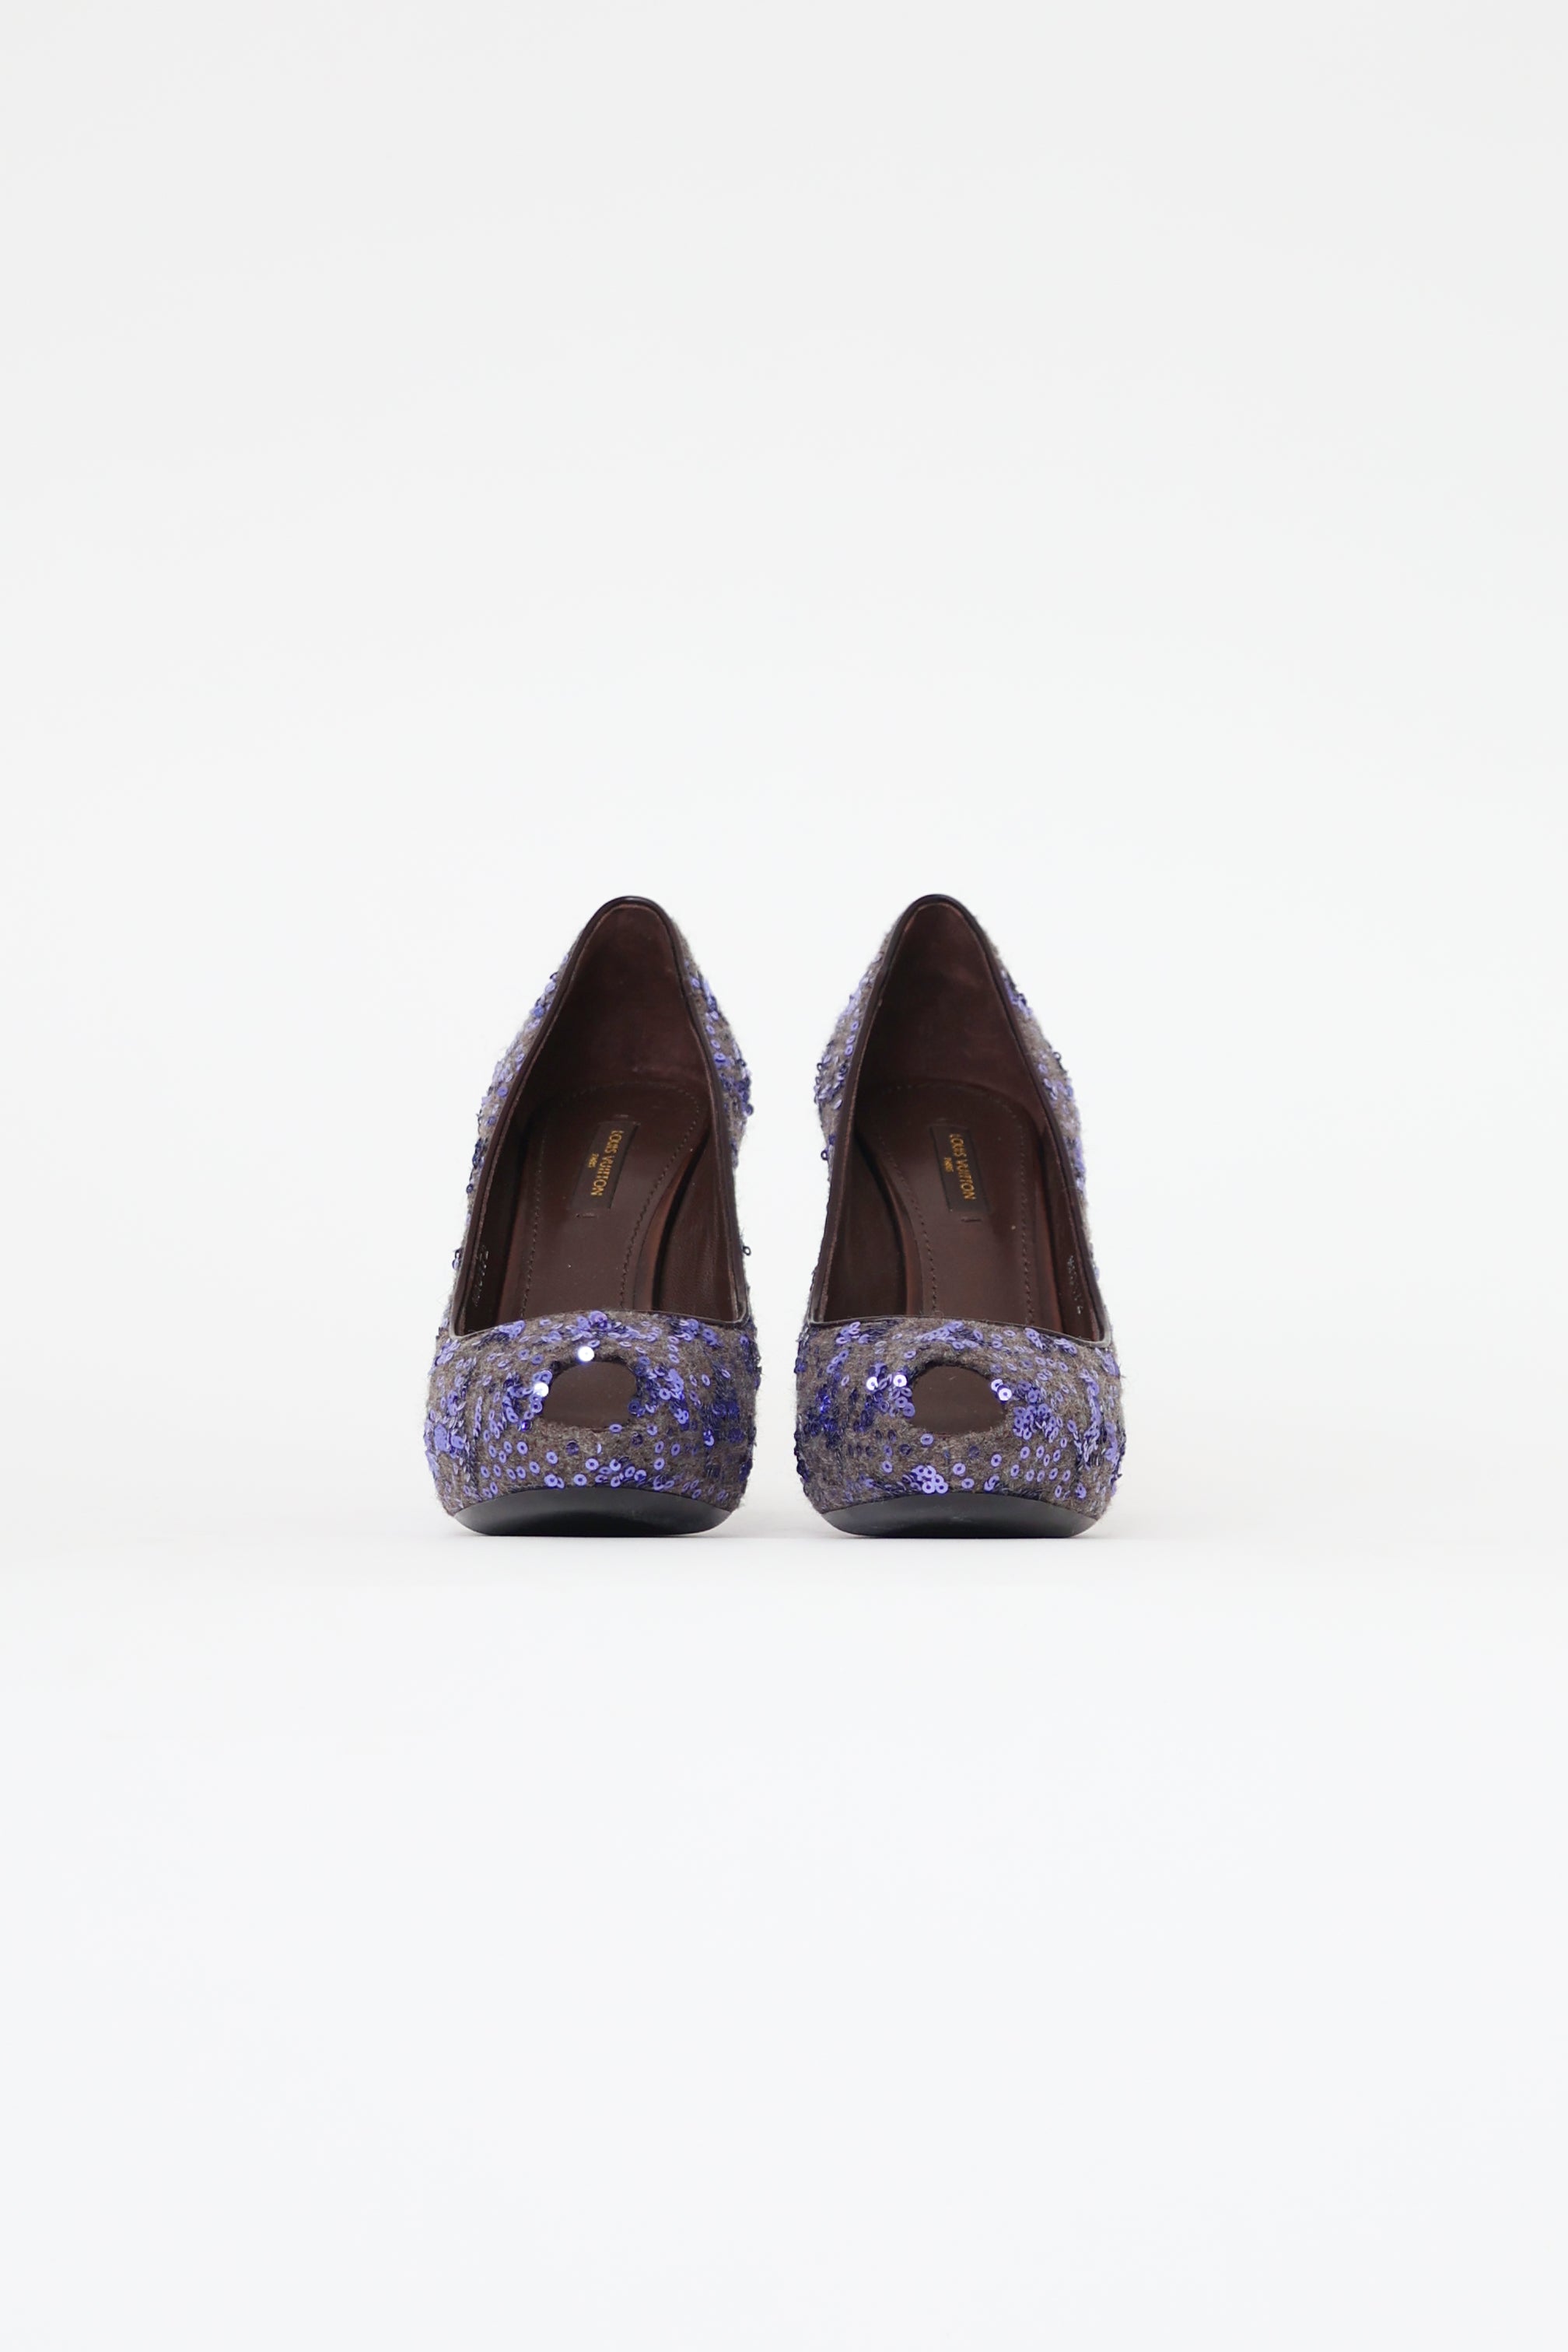 Louis Vuitton Oh Really Purple Sequins Glitter Lock Platform Peep